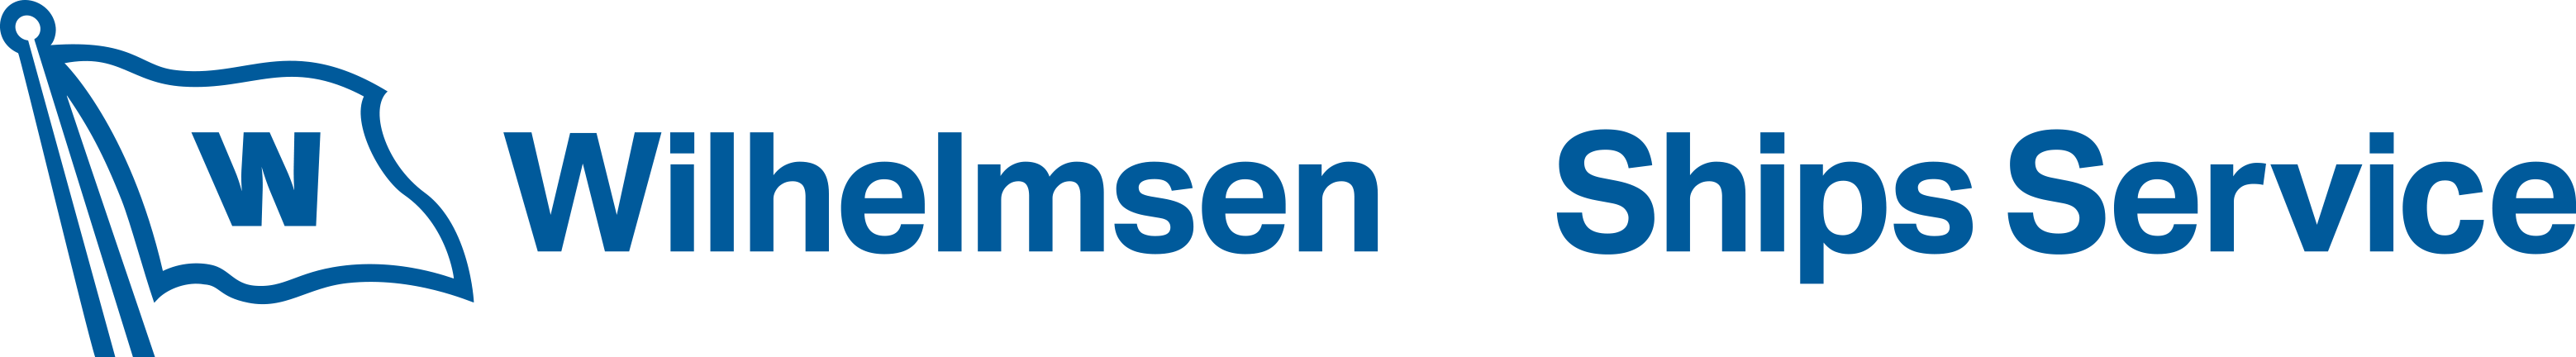 Company logo for Wilhelmsen Ships Service (s) Pte. Ltd.